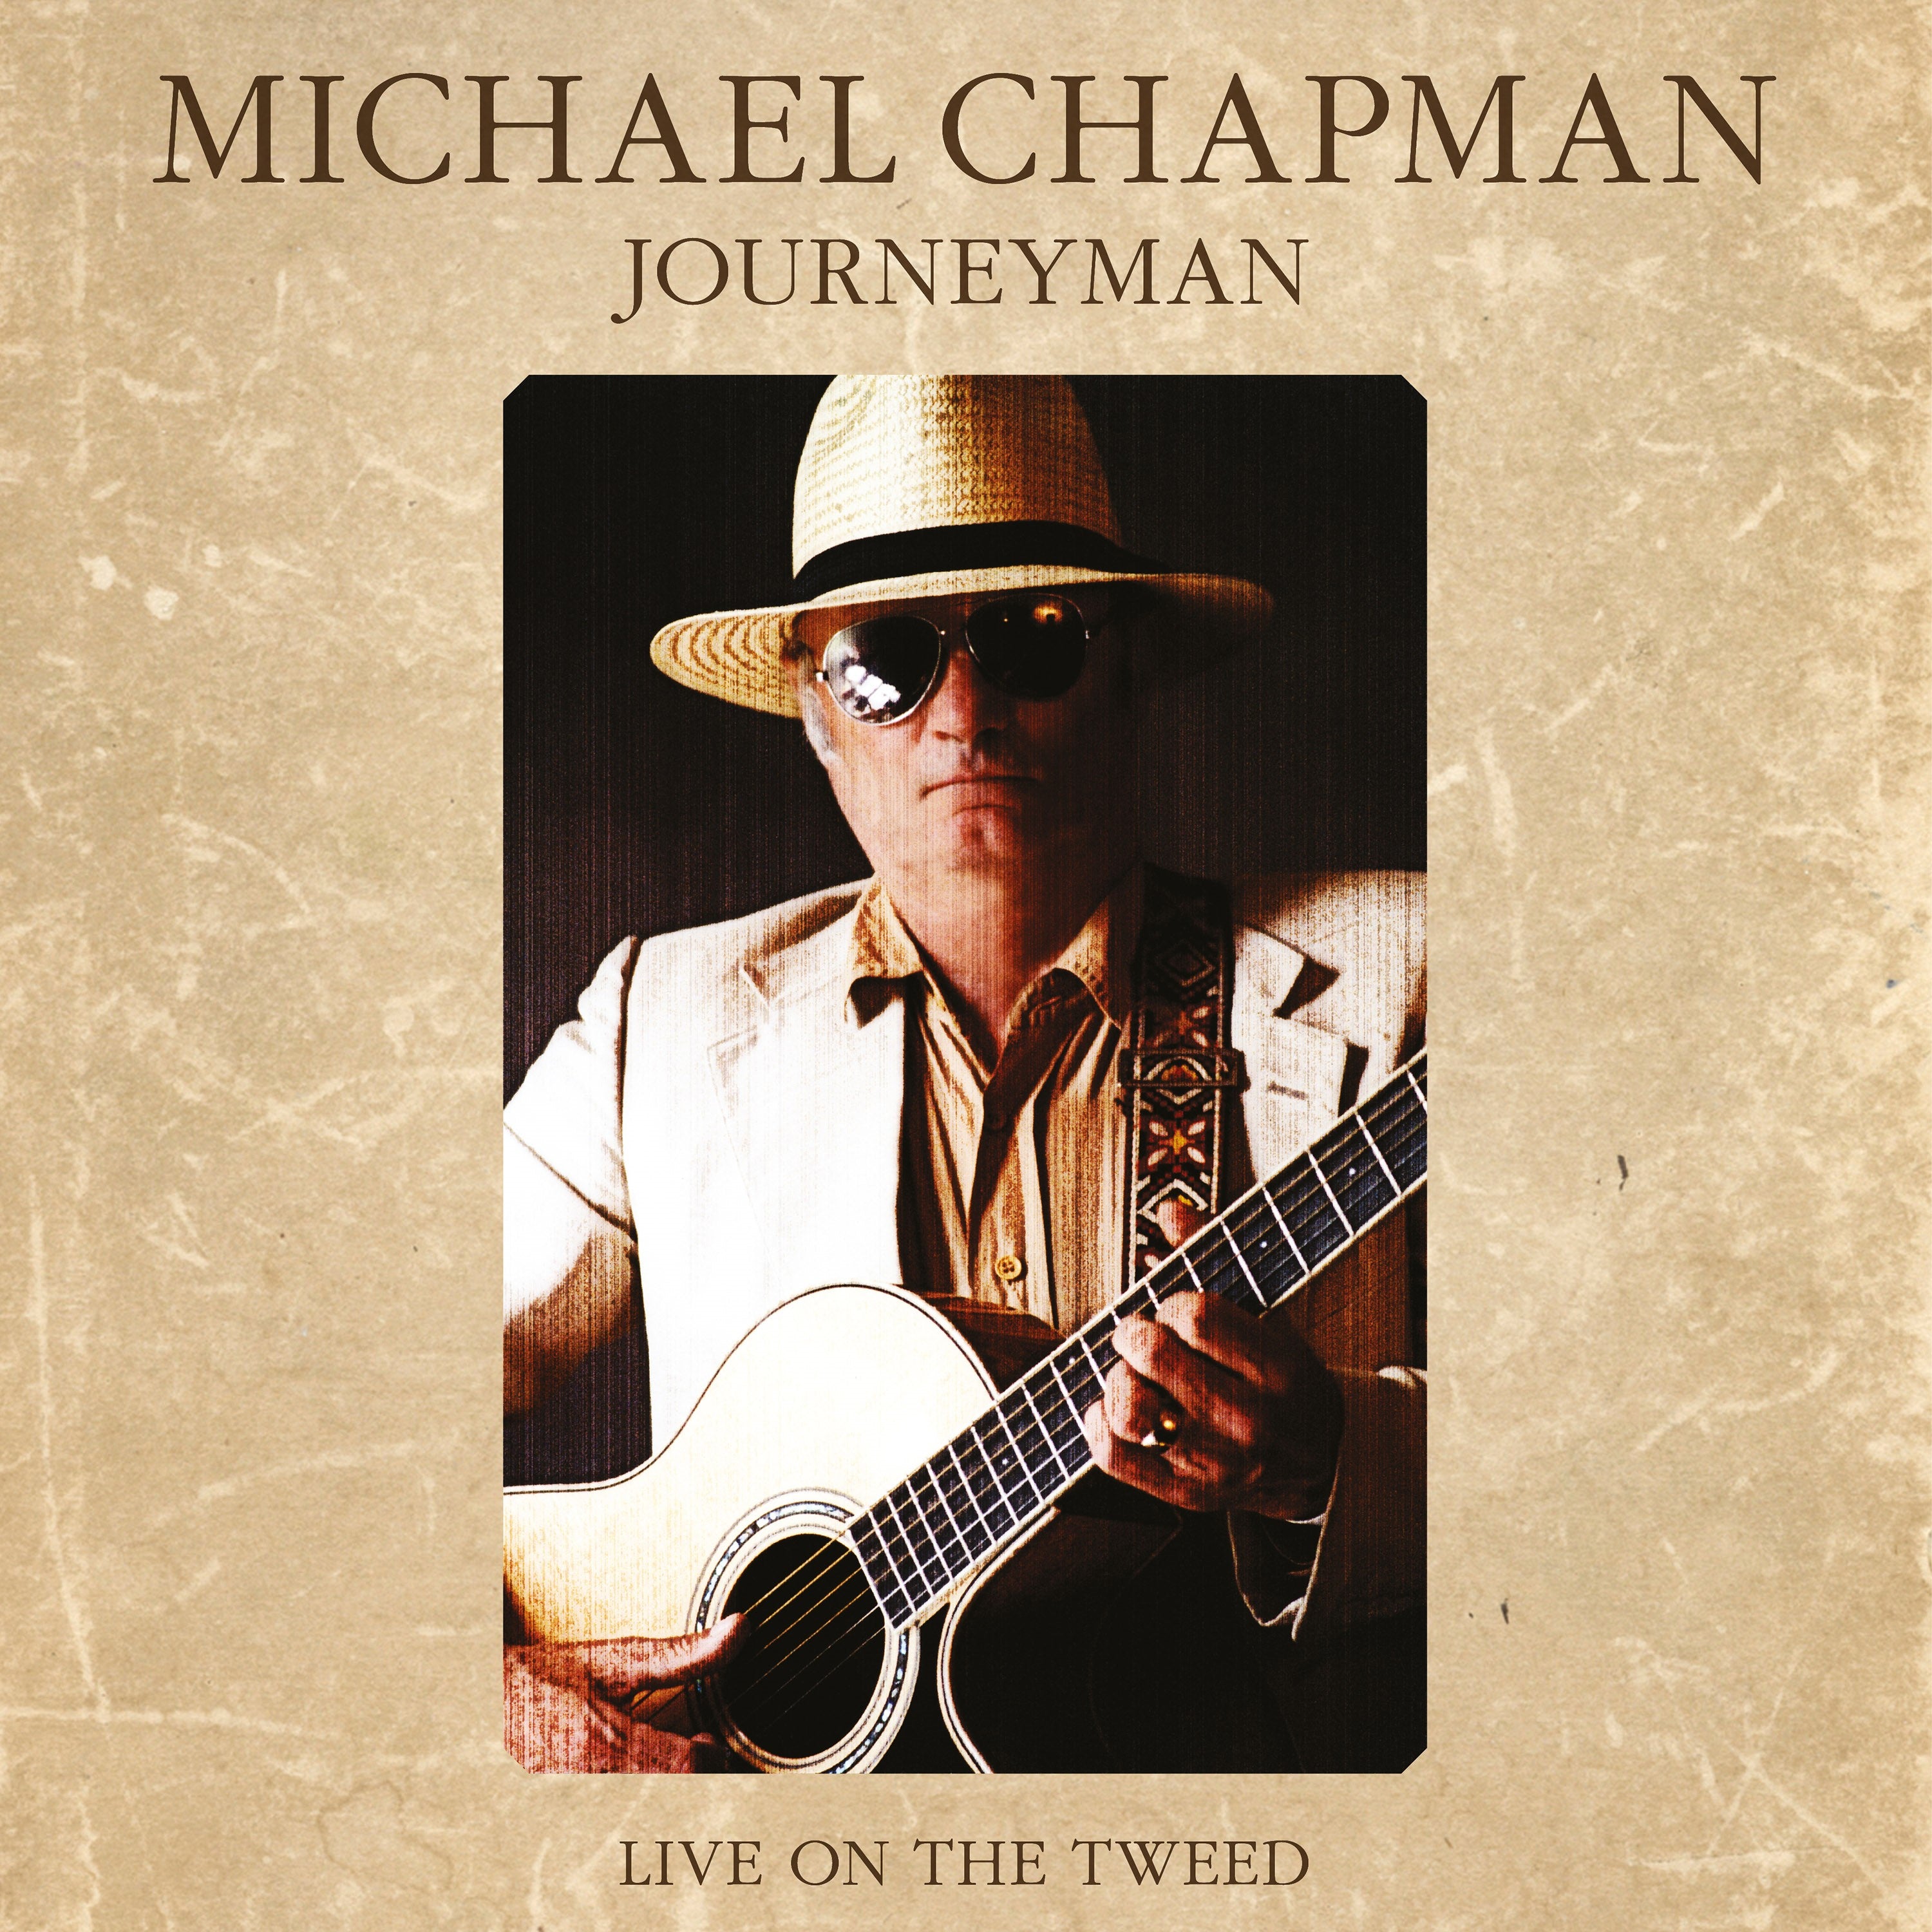 Michael Chapman - Journeyman - Live On The Tweed - Vinyl LP (With bonus DVD)